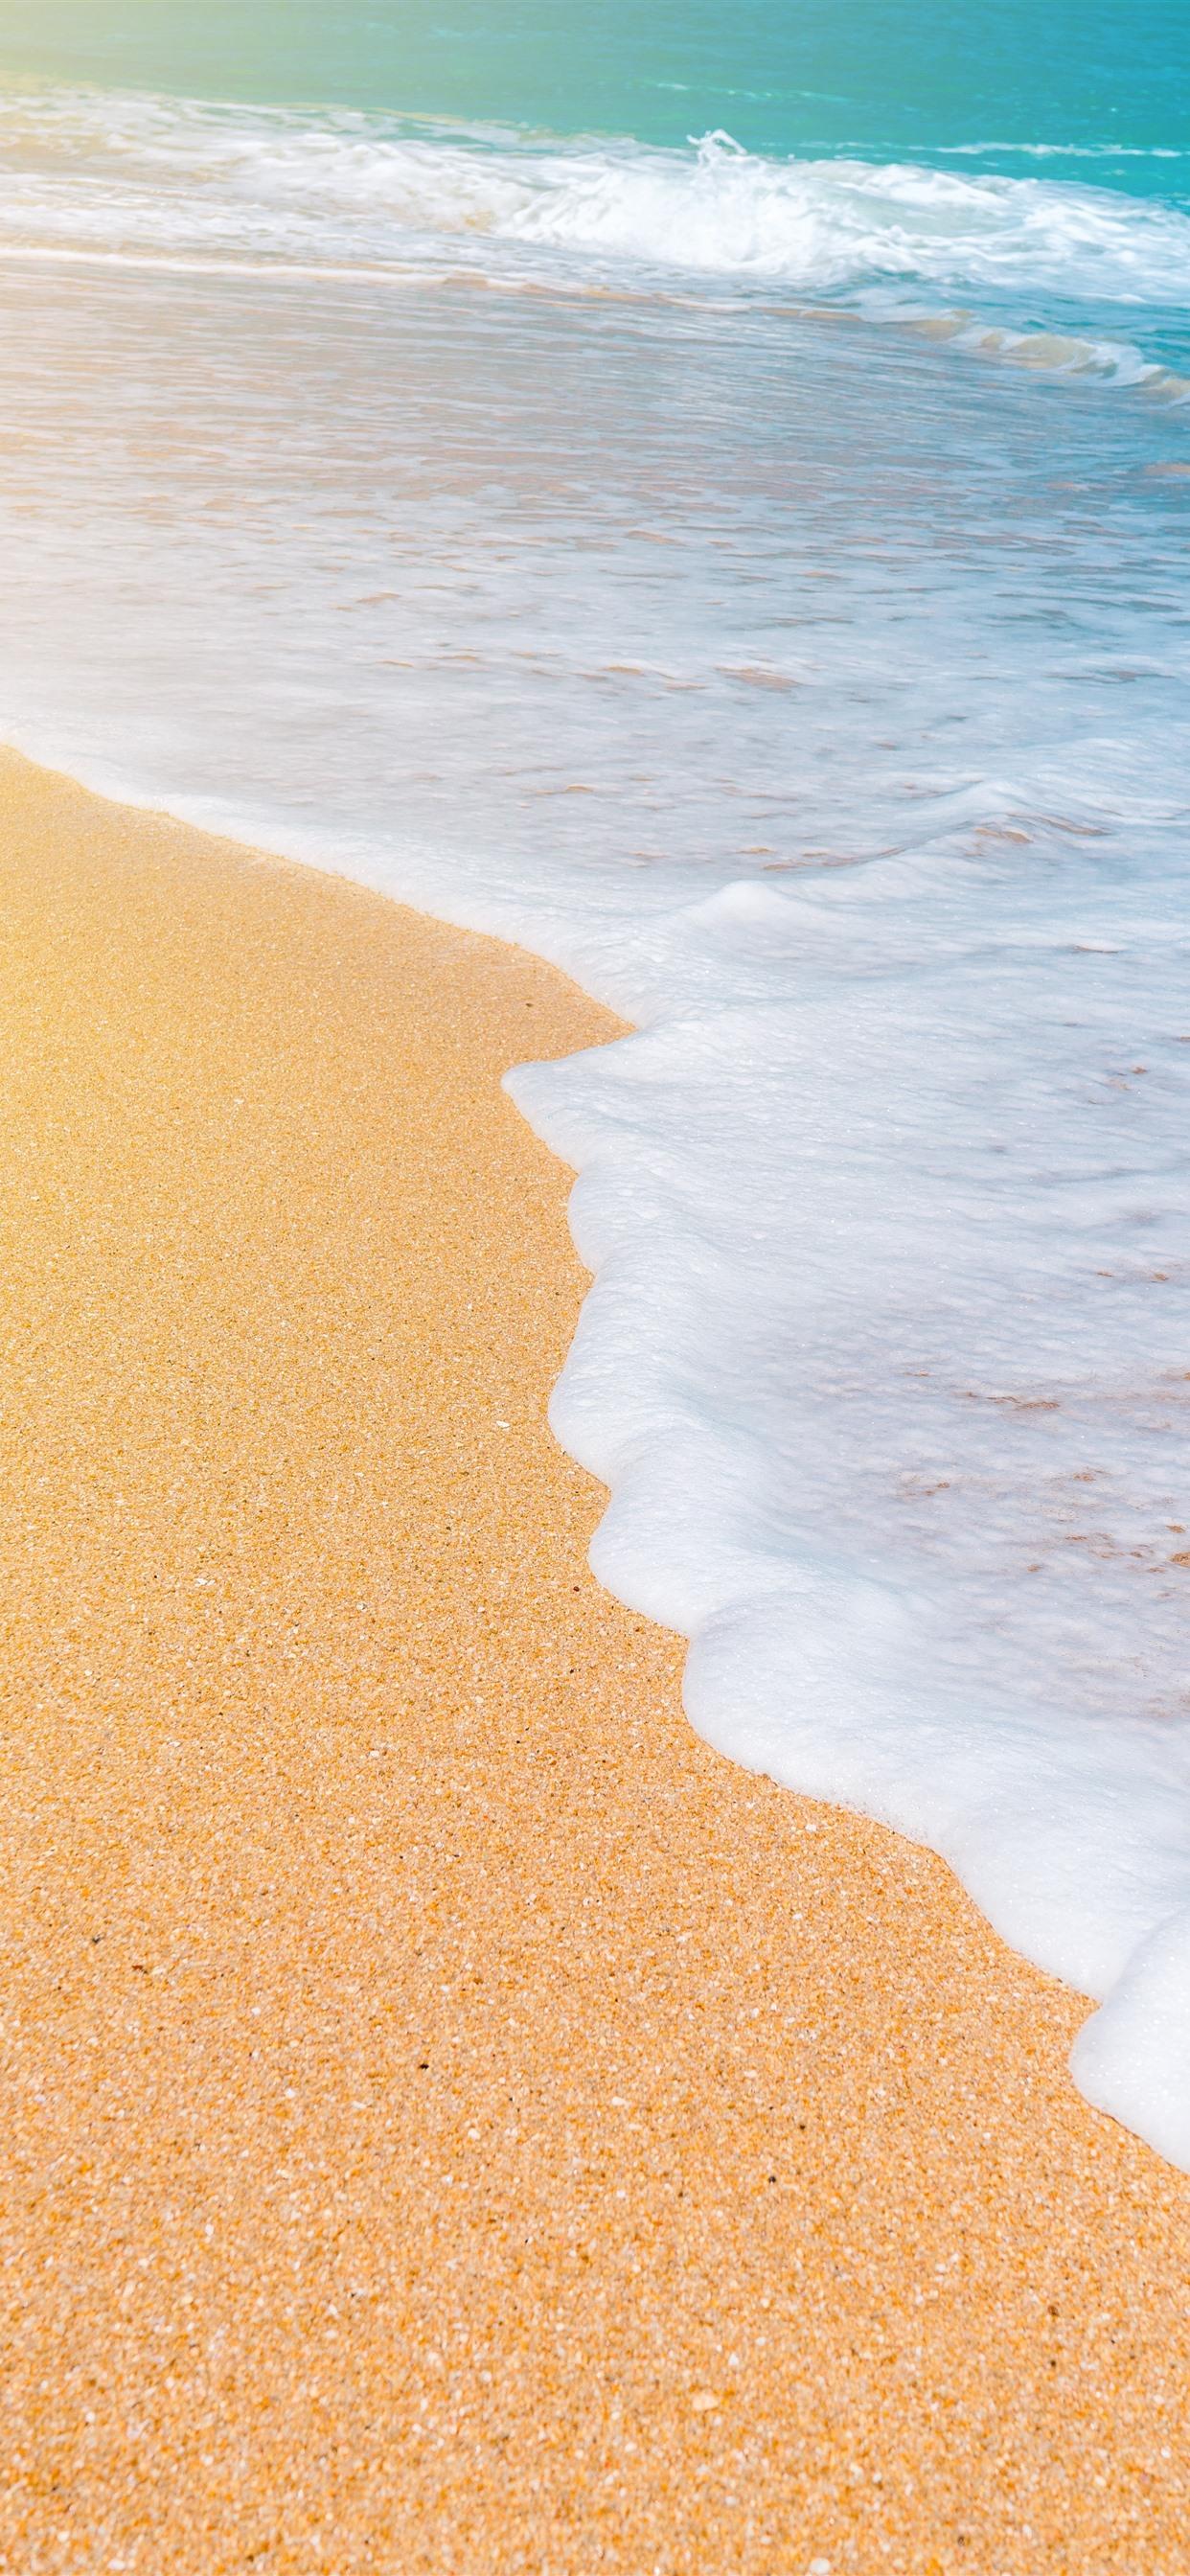 Sea, waves, foam, beach 1242x2688 iPhone XS Max wallpaper